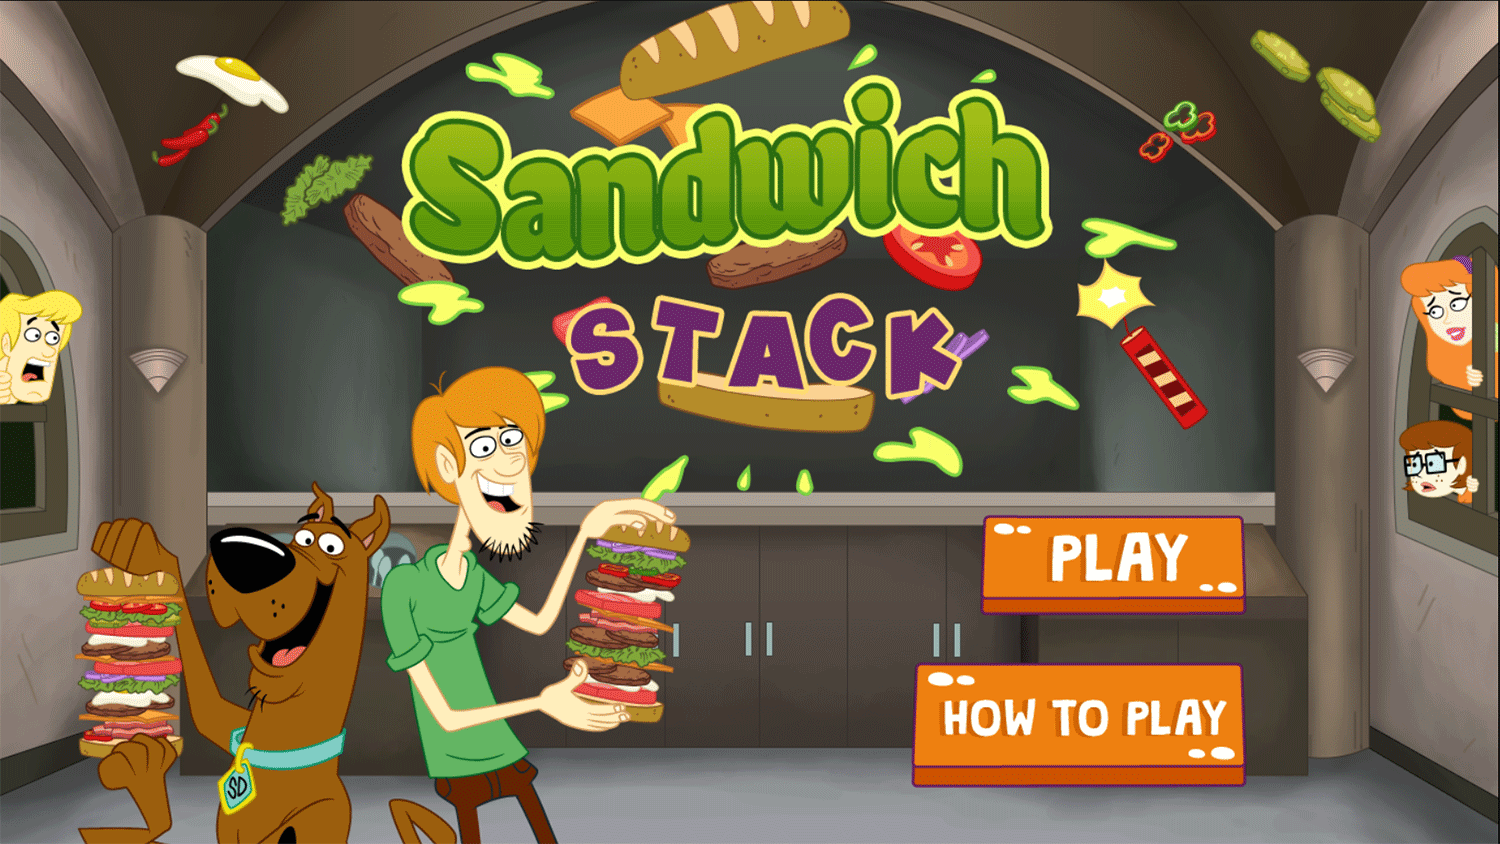 Scooby Doo Sandwich Stack Welcome Screen Screenshot.